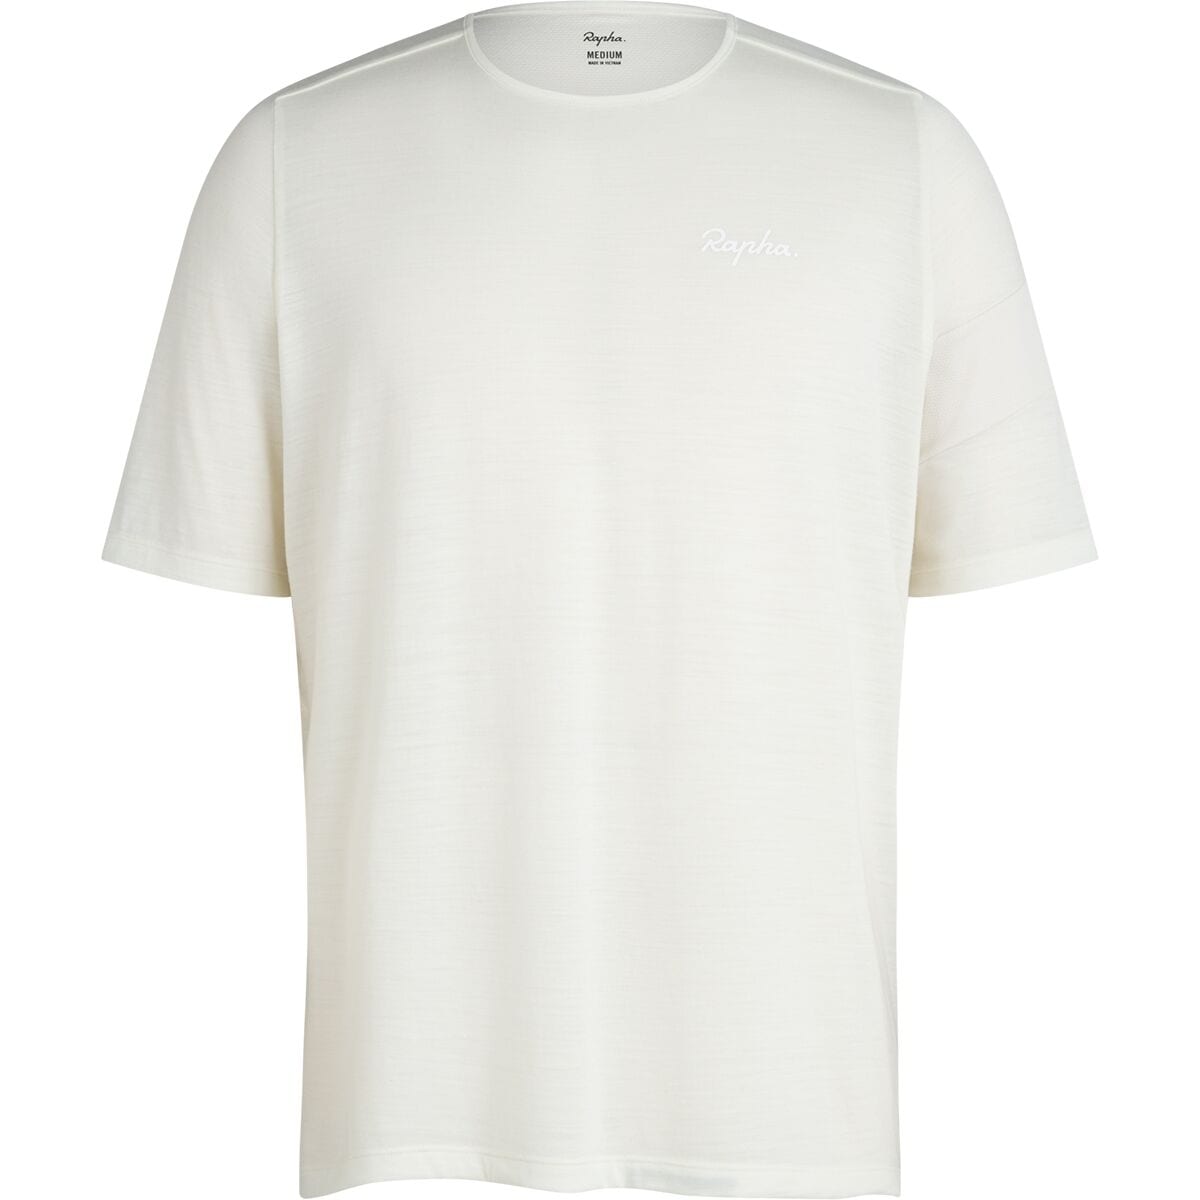 Rapha Trail Merino Short-Sleeve T-shirt - Men's